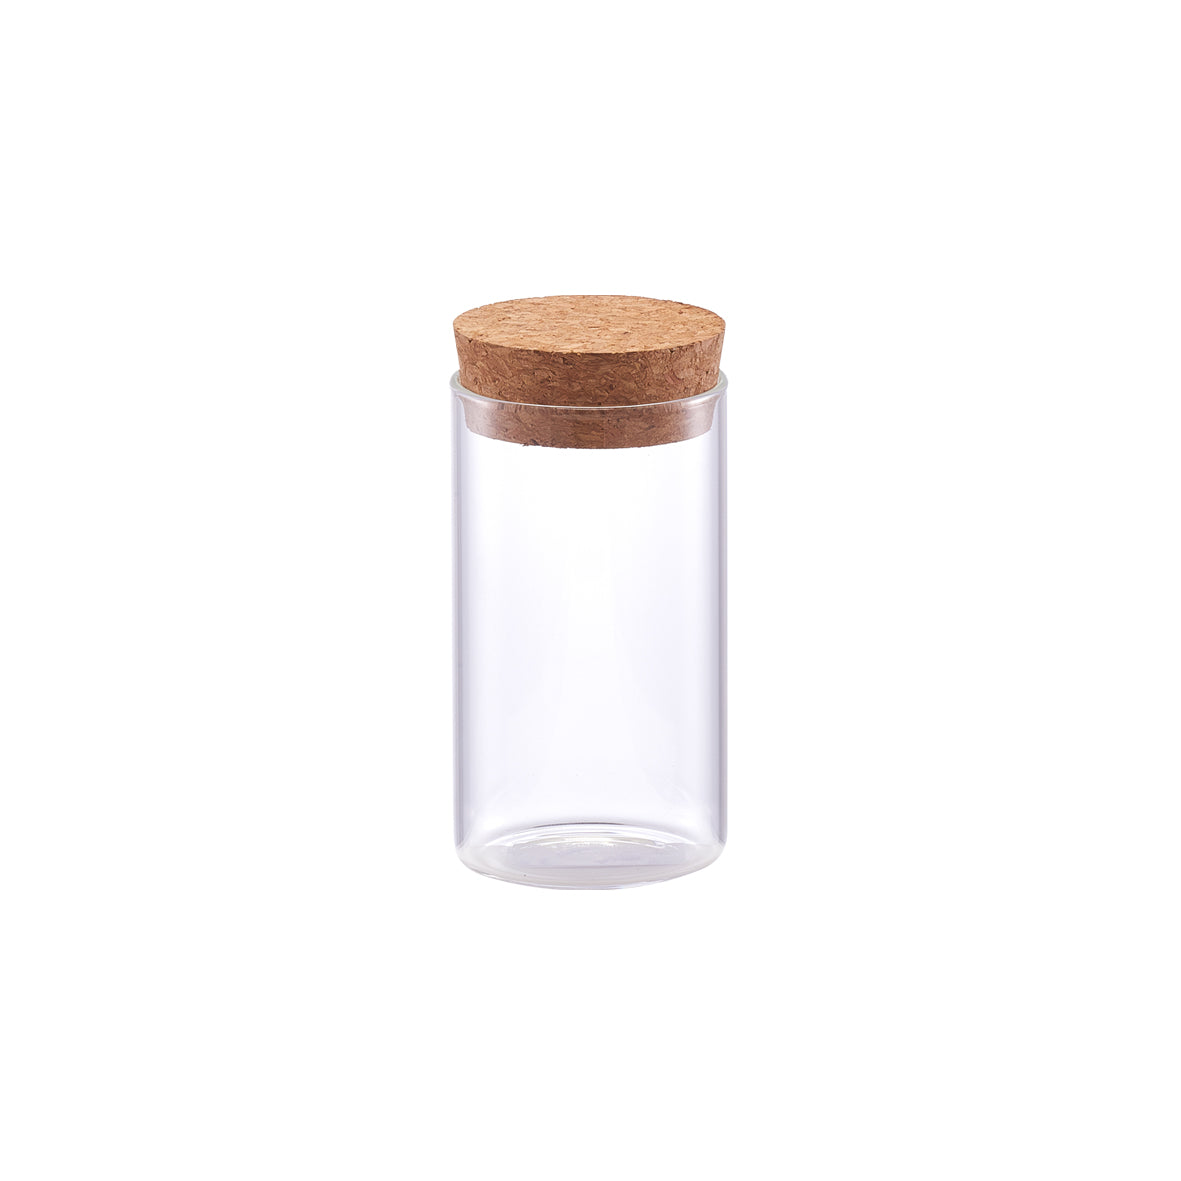 Zeller Present Vorratsglas mit Korkdeckel | HORST